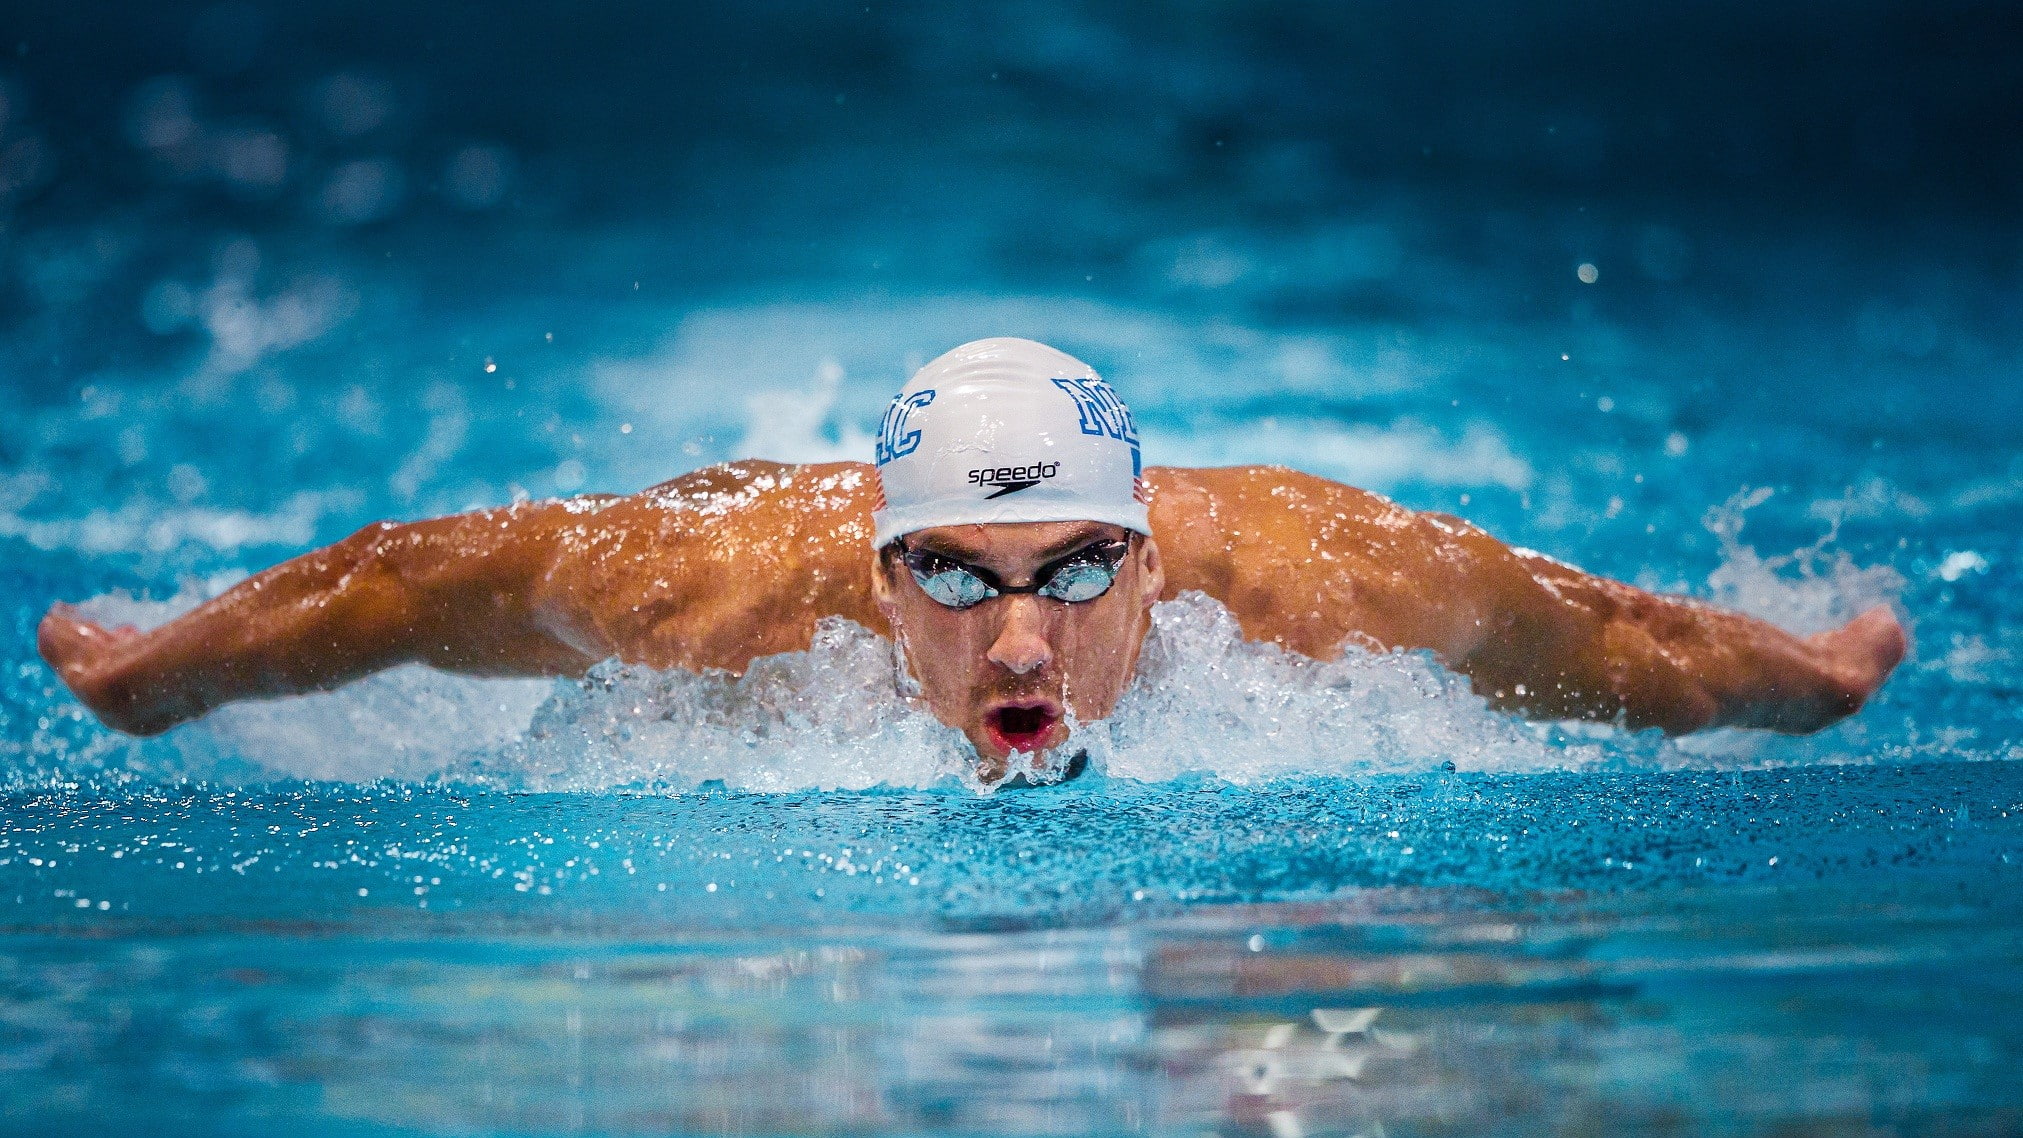 Michael phelps, Swimmer, Olympian, sport, swimming, water, pool